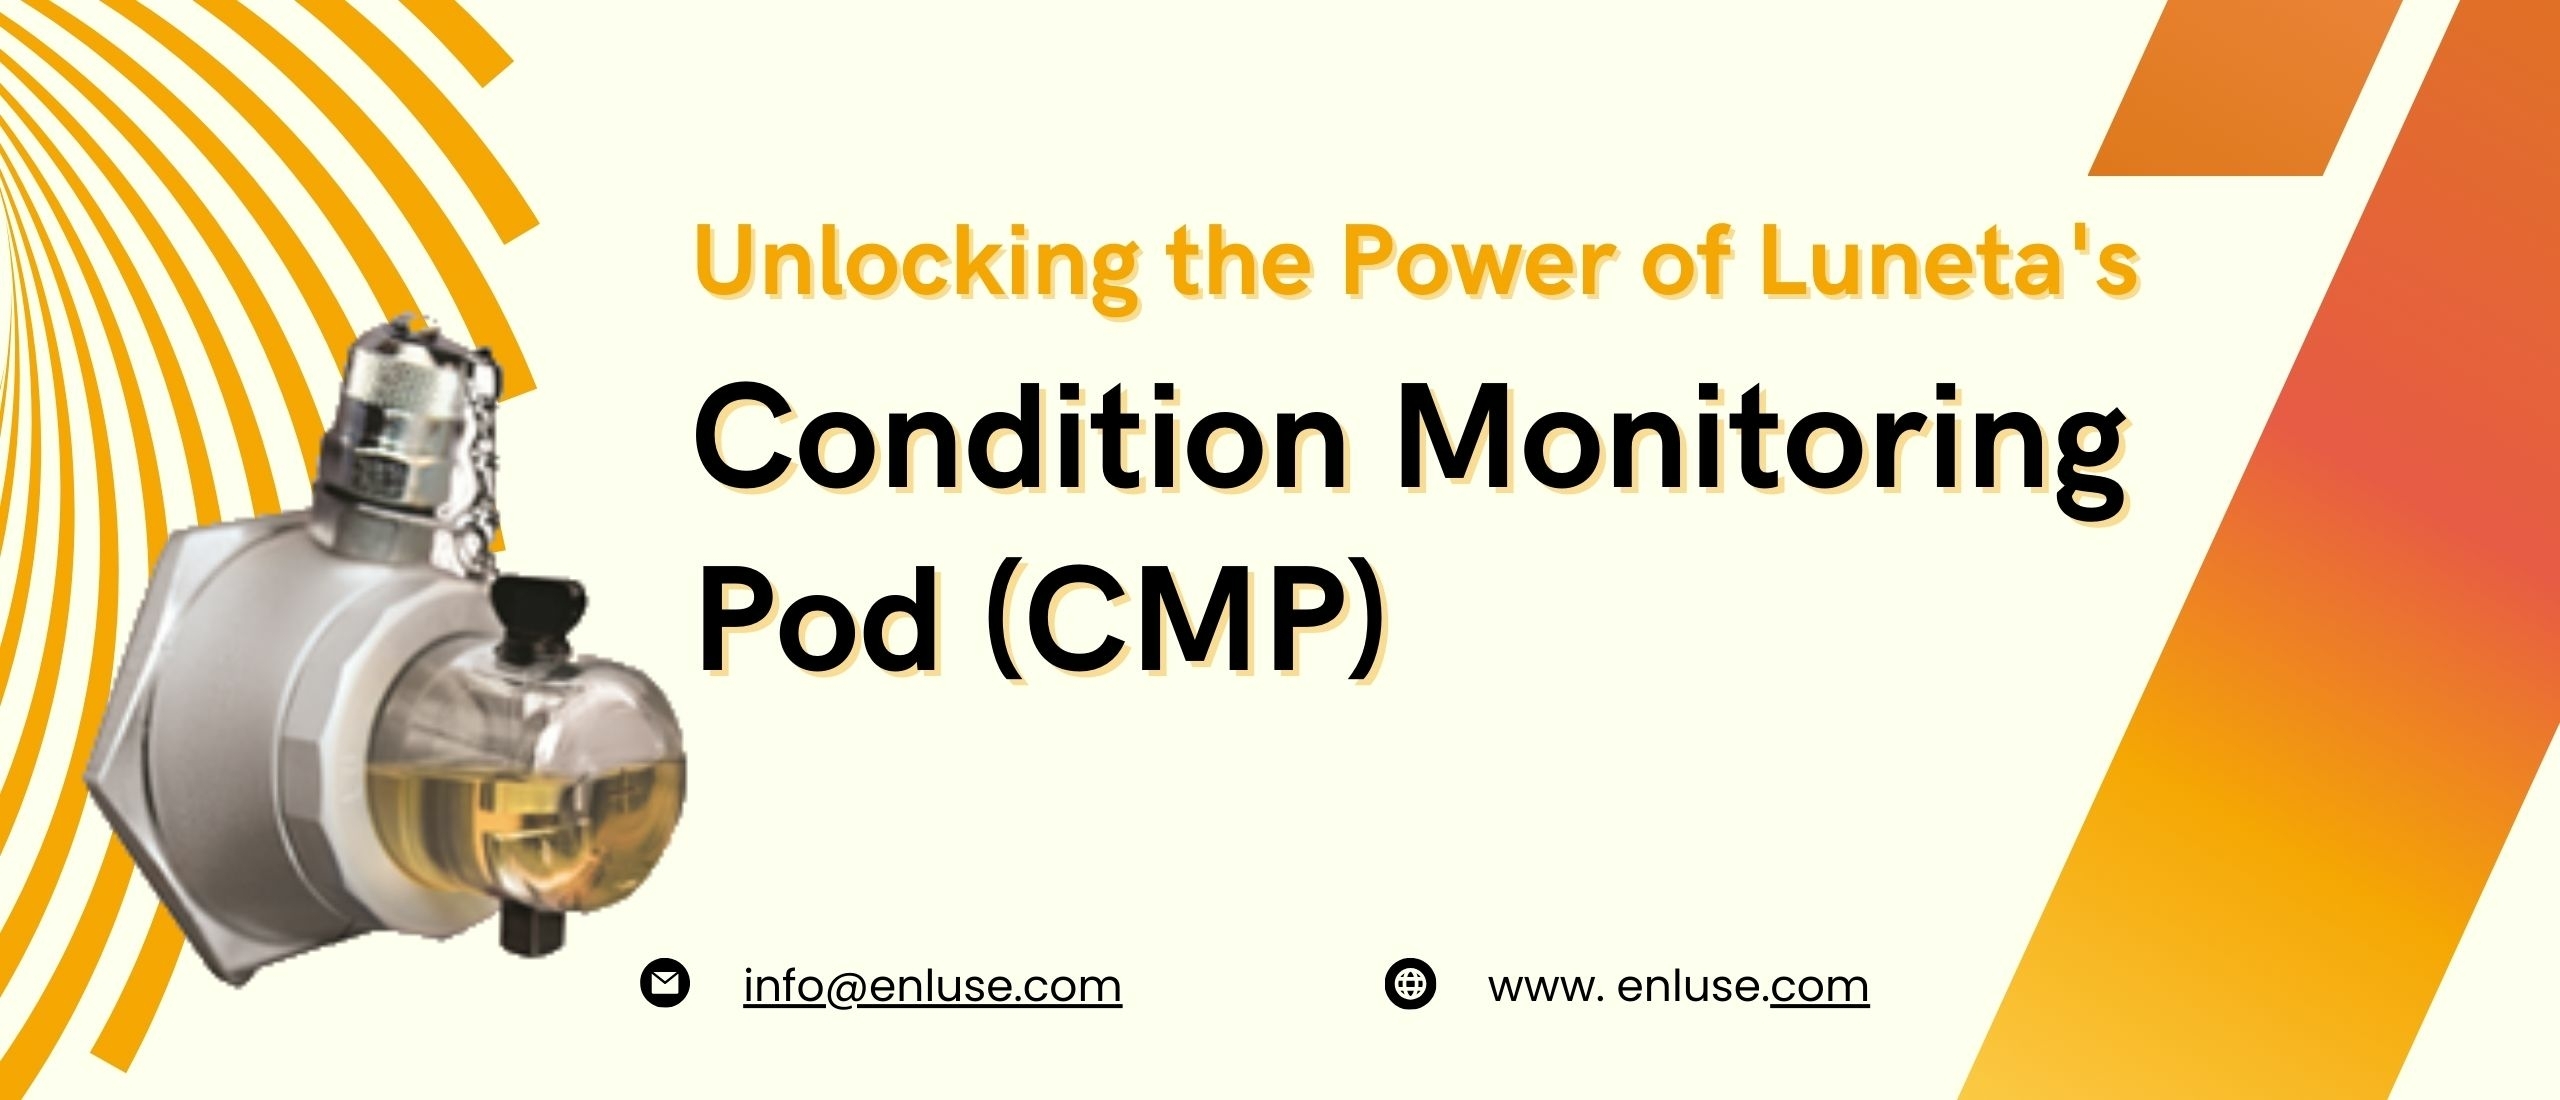 Unlocking the Power of Luneta's Condition Monitoring Pod (CMP)